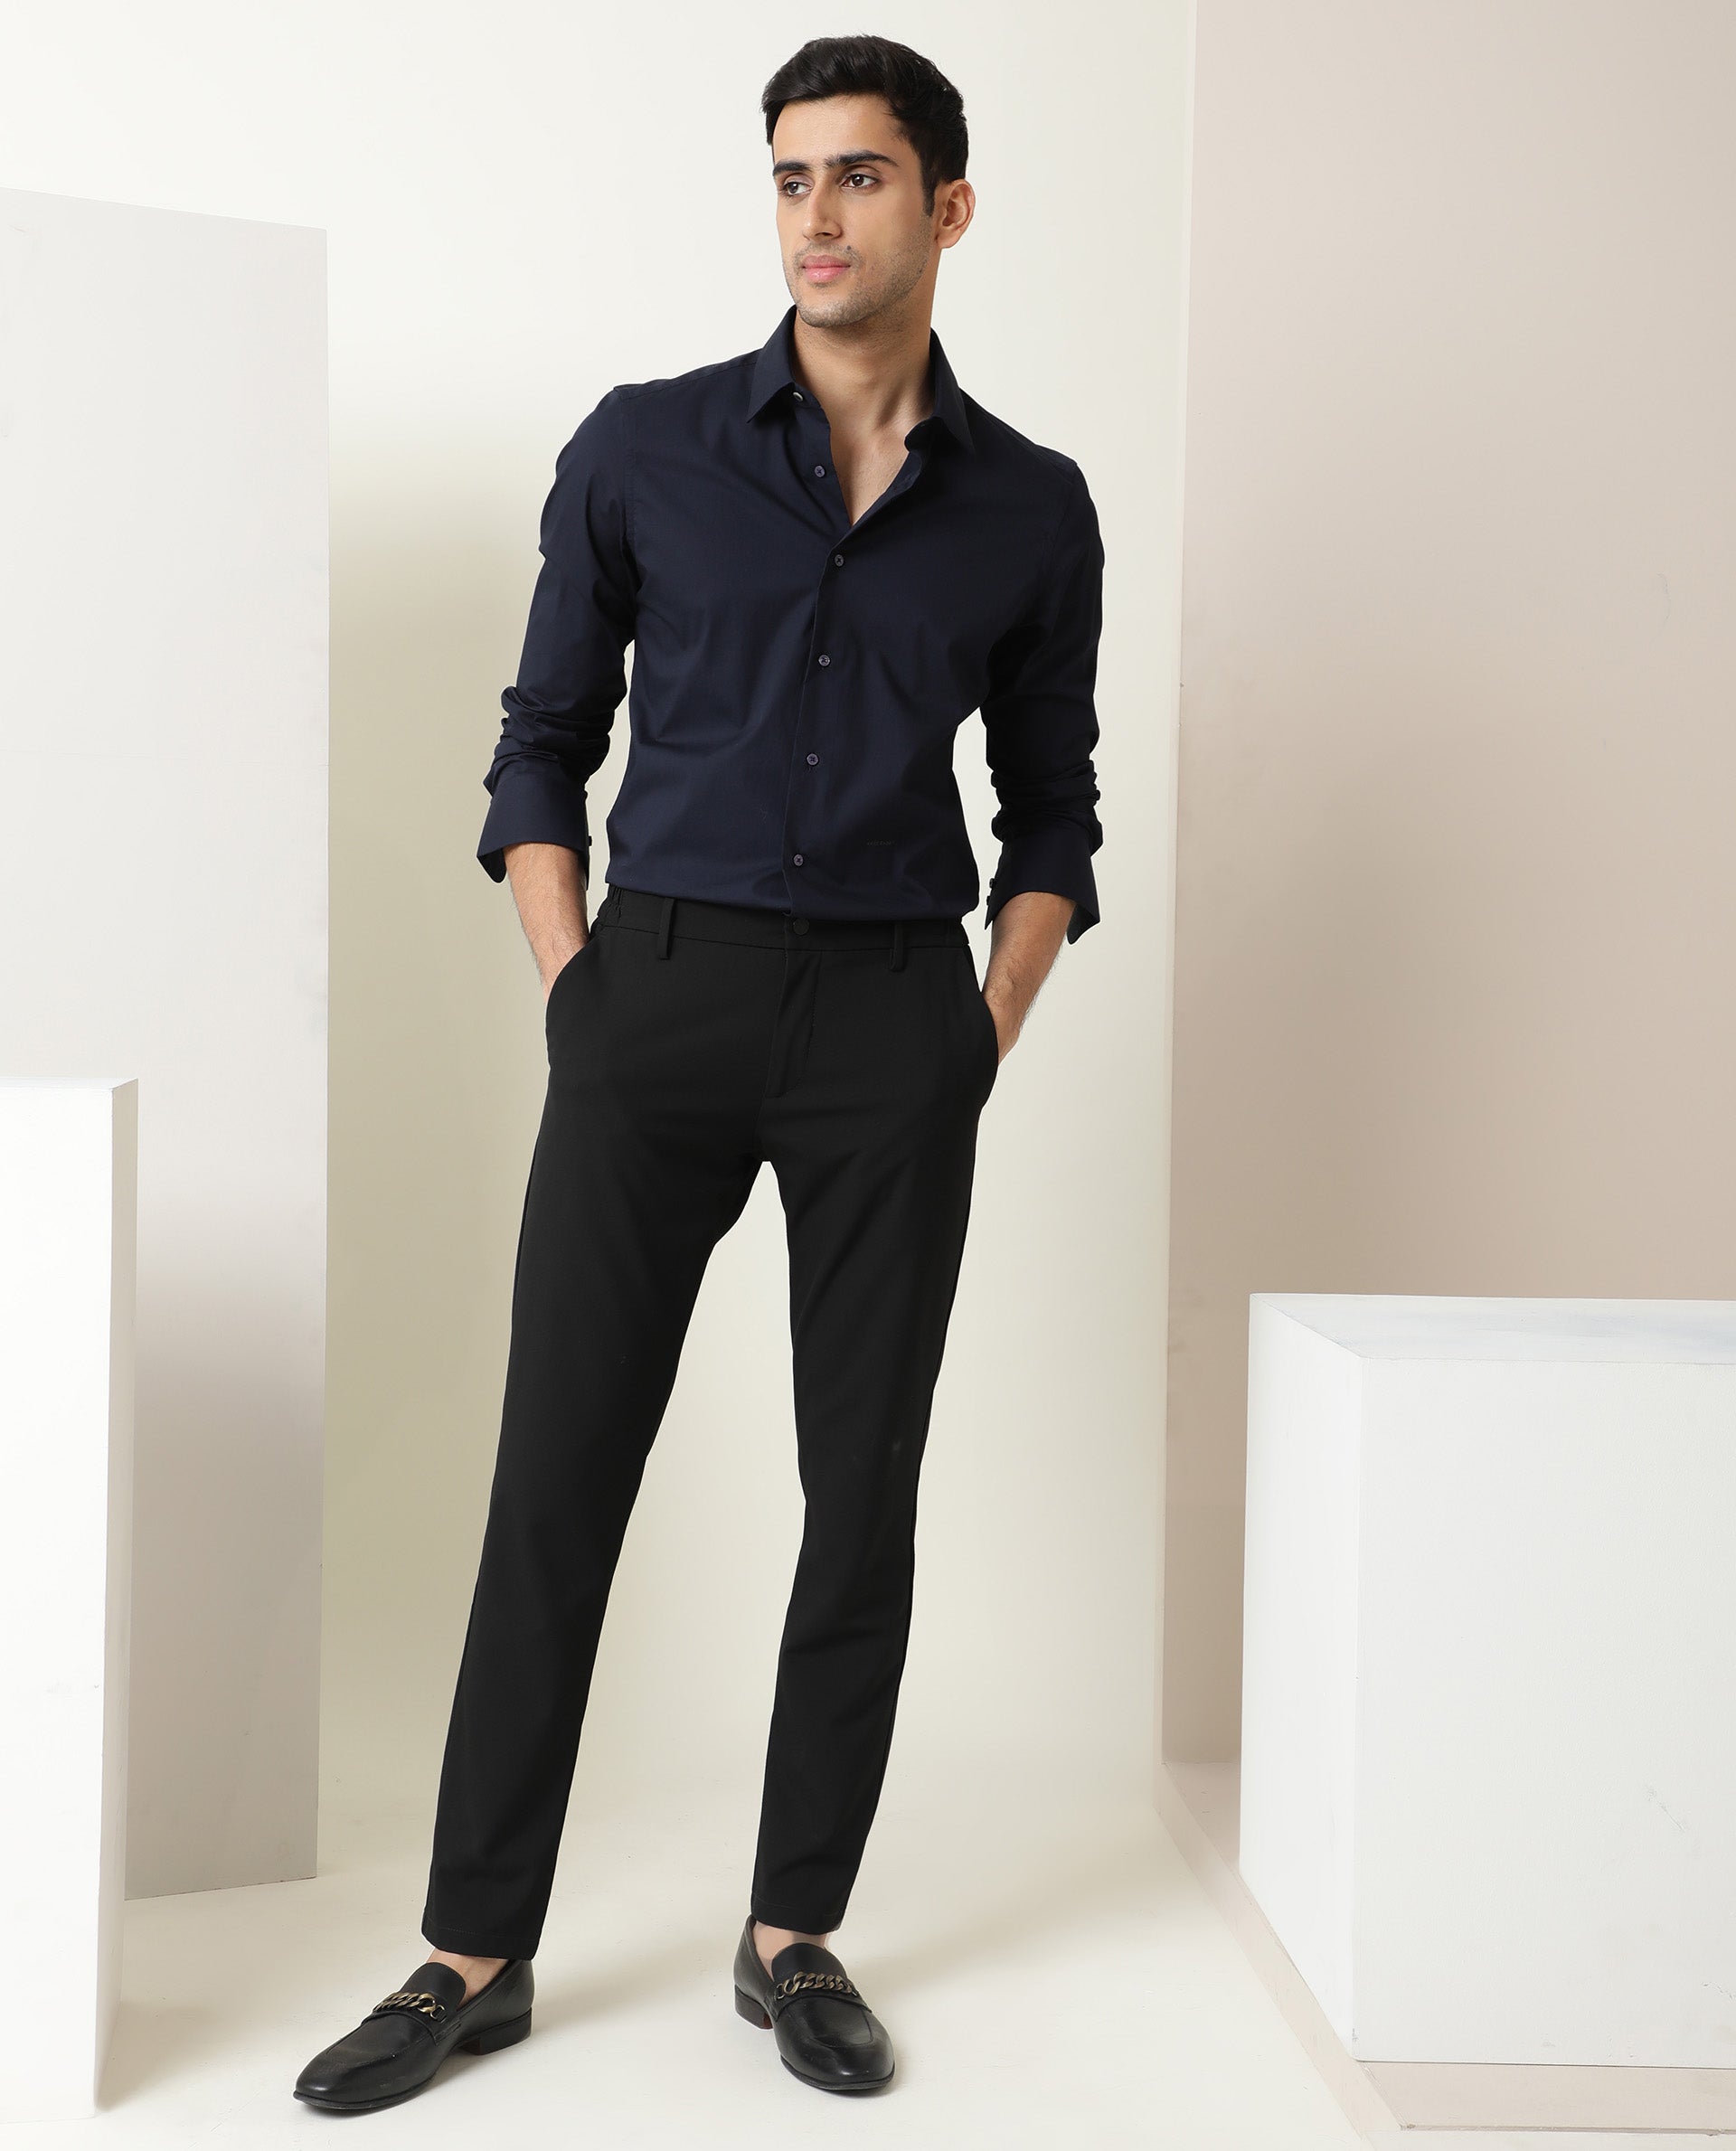 Black Shirt Grey Pants: The Timeless Combination